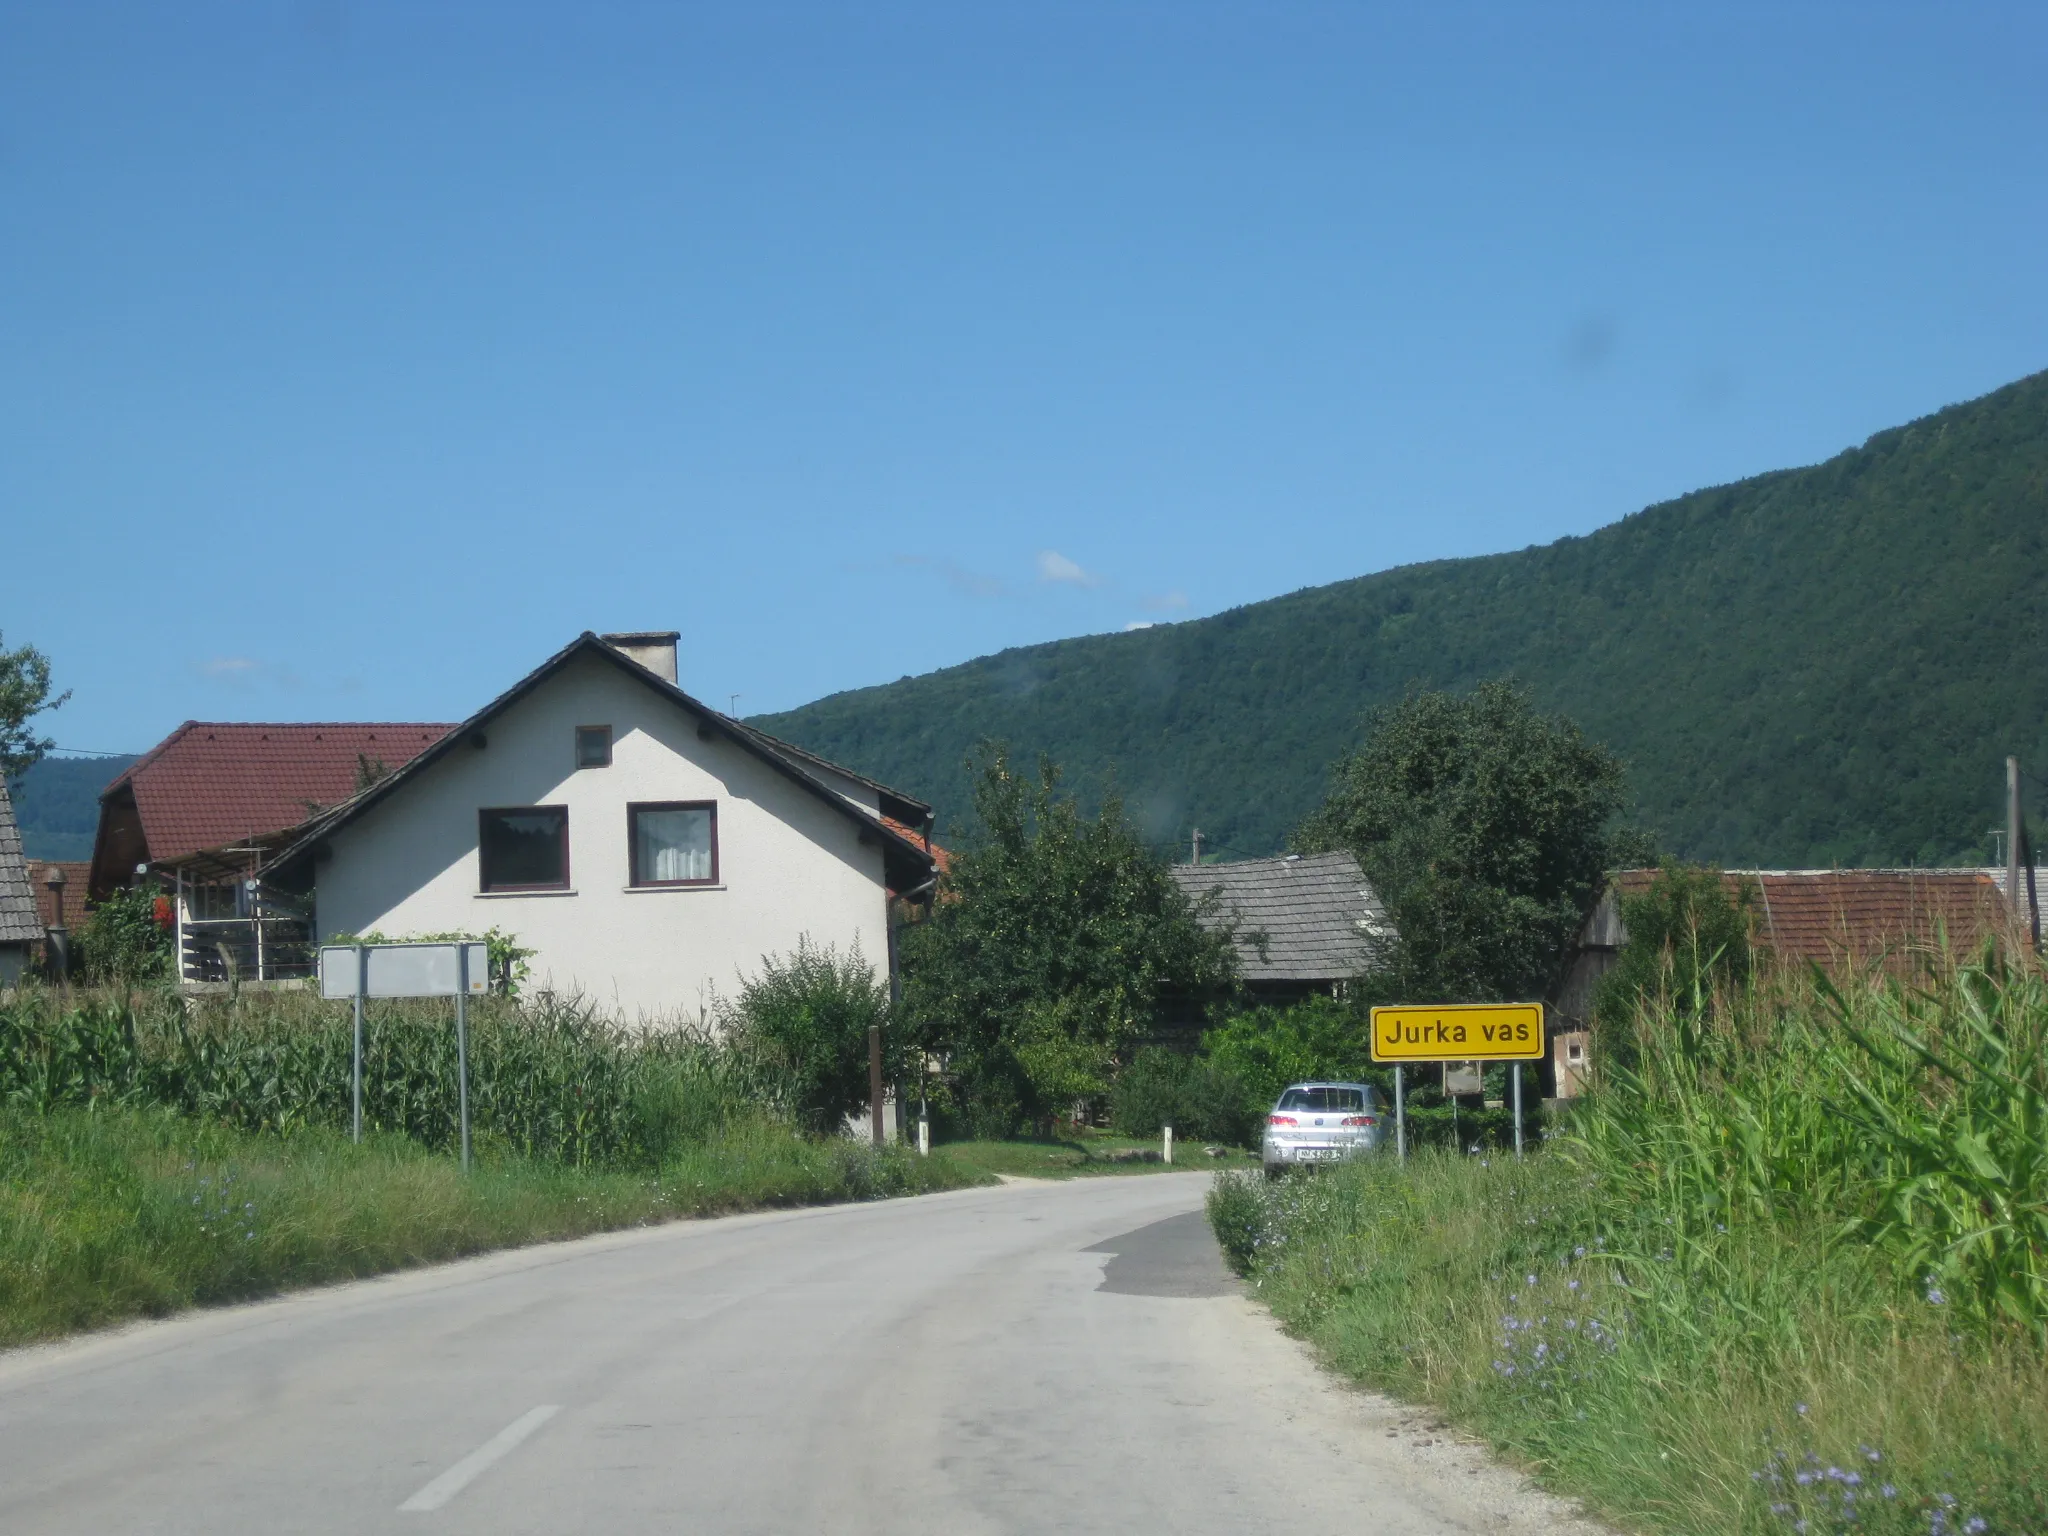 Photo showing: Jurka Vas, village in Slovenia